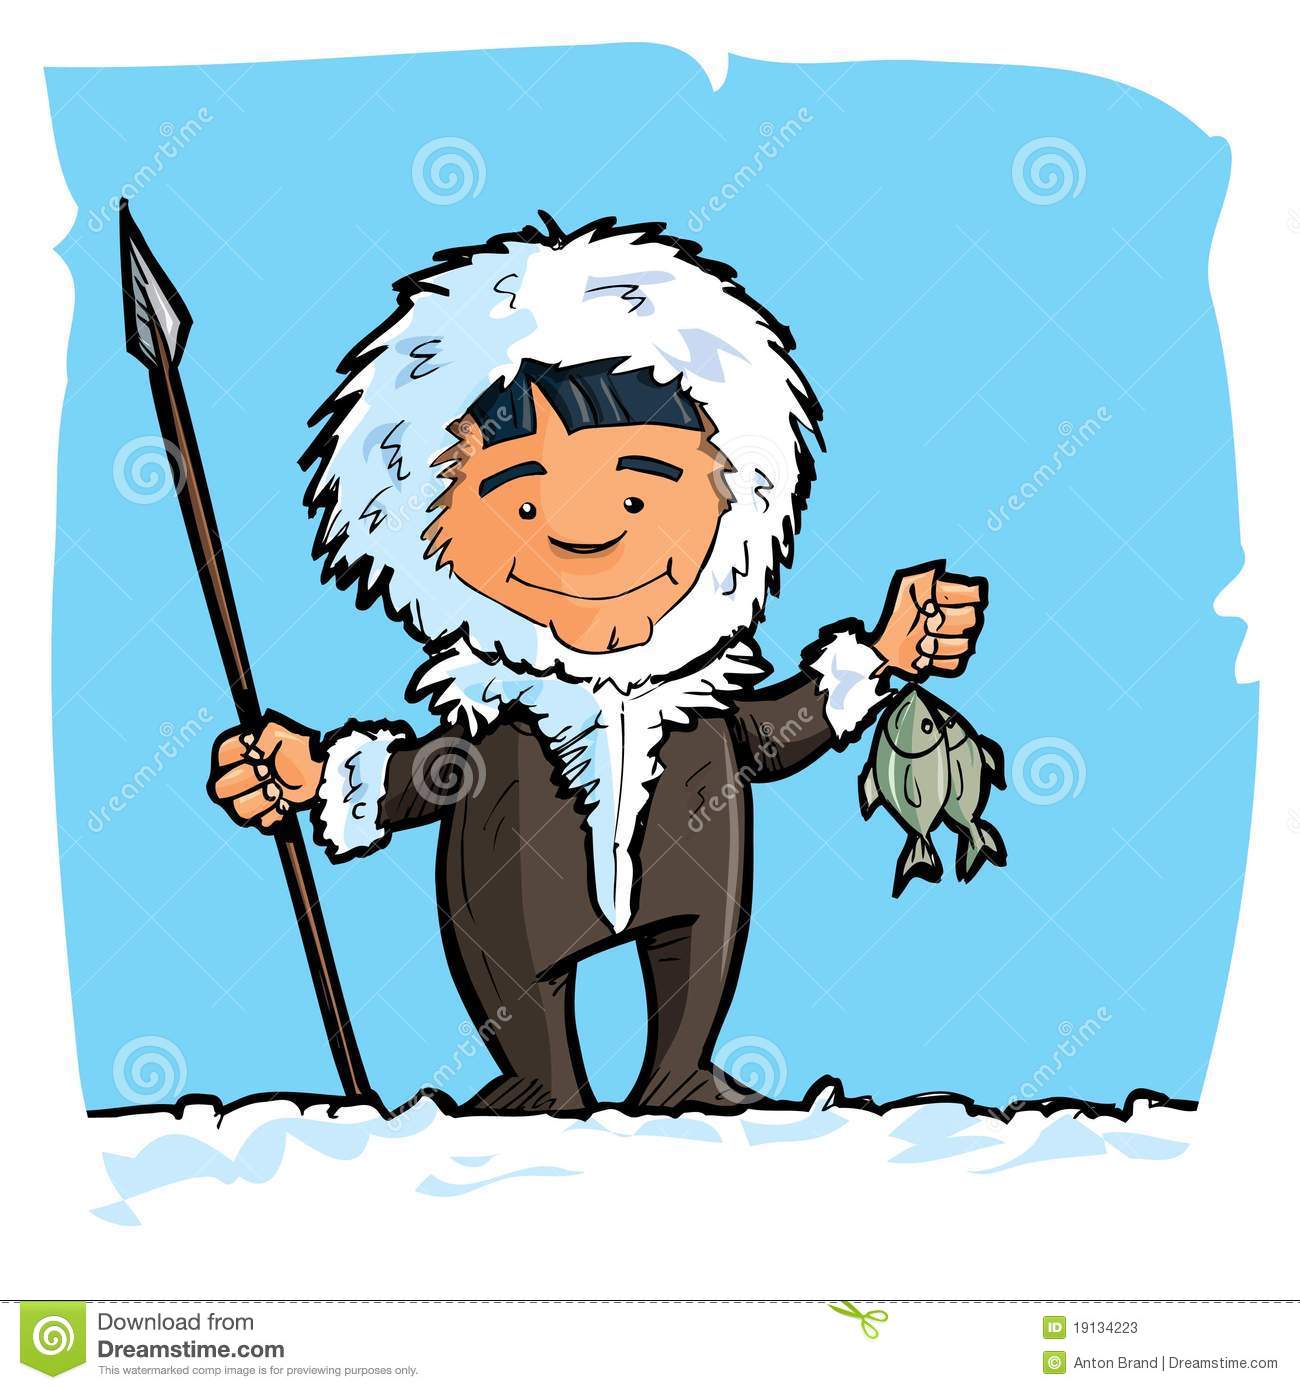 Cartoon eskimo with a spear and a fish Stock Photos